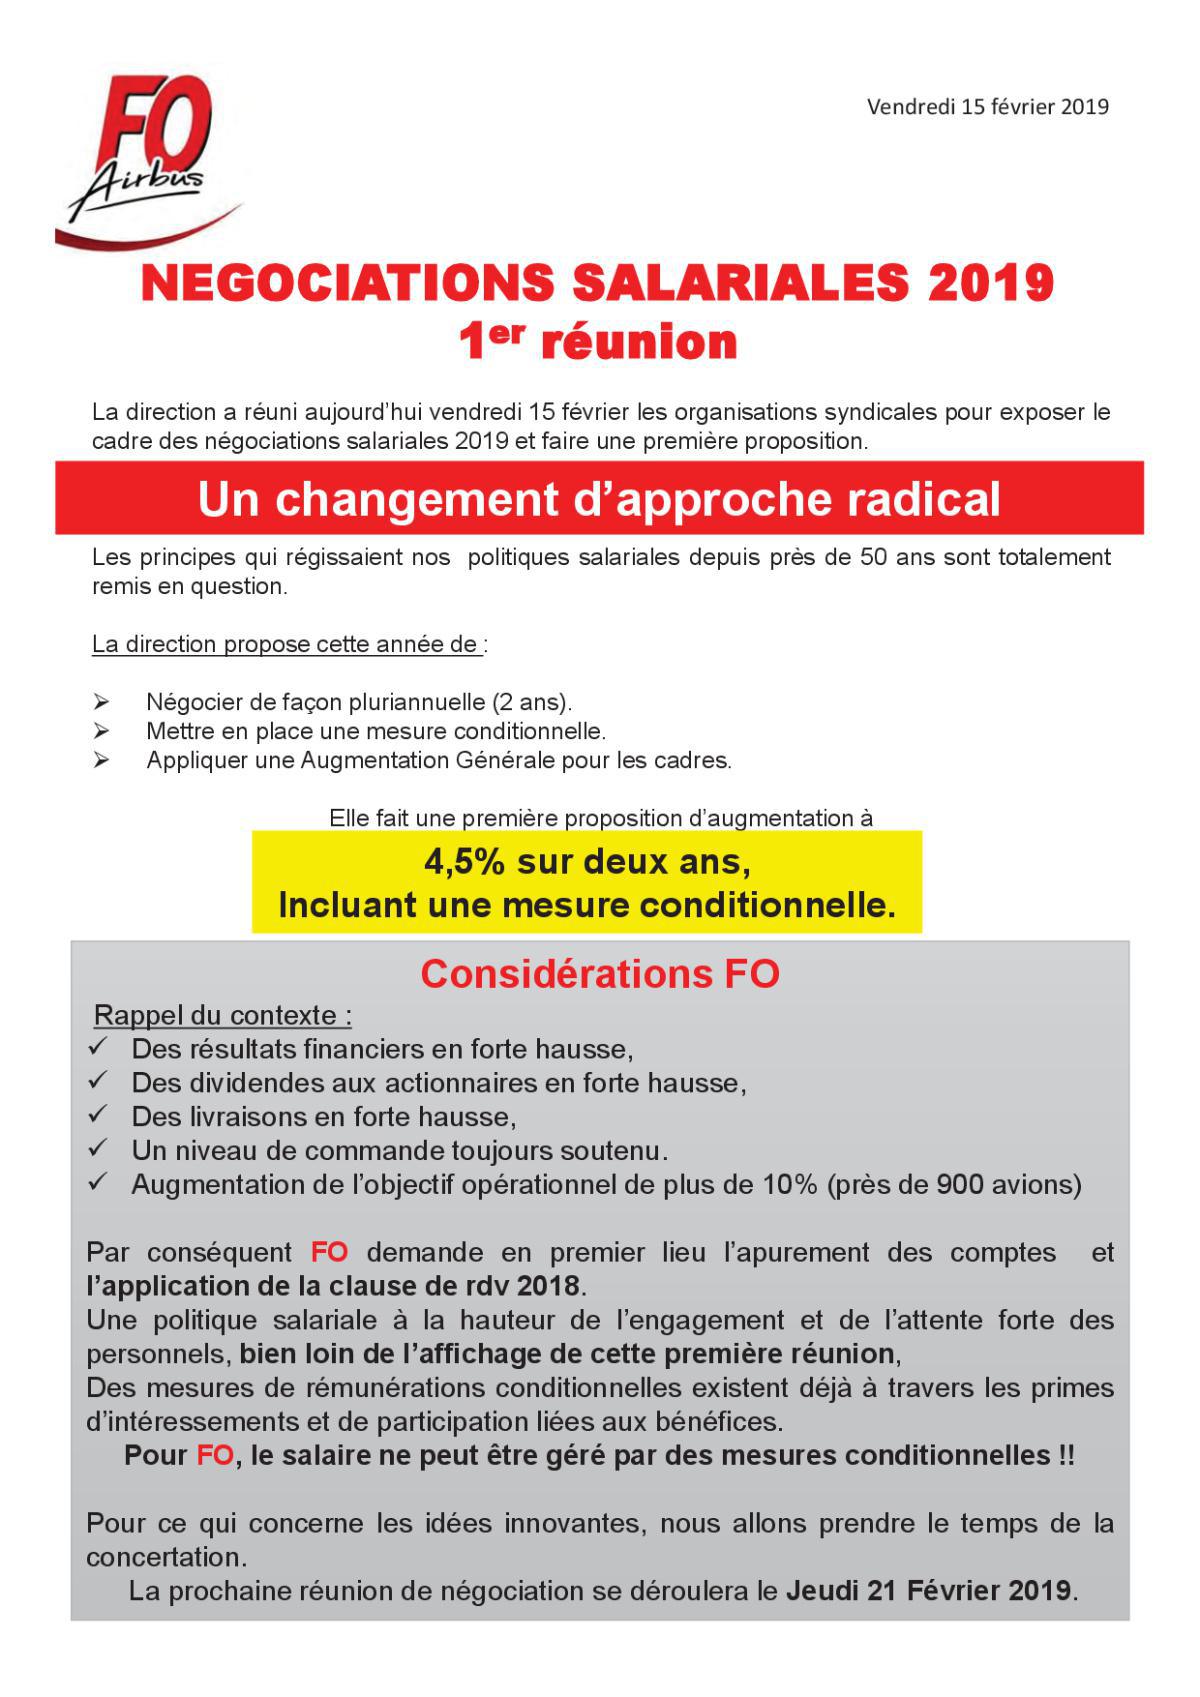 AIRBUS - Négociations salariales 2019 (1ère réunion)